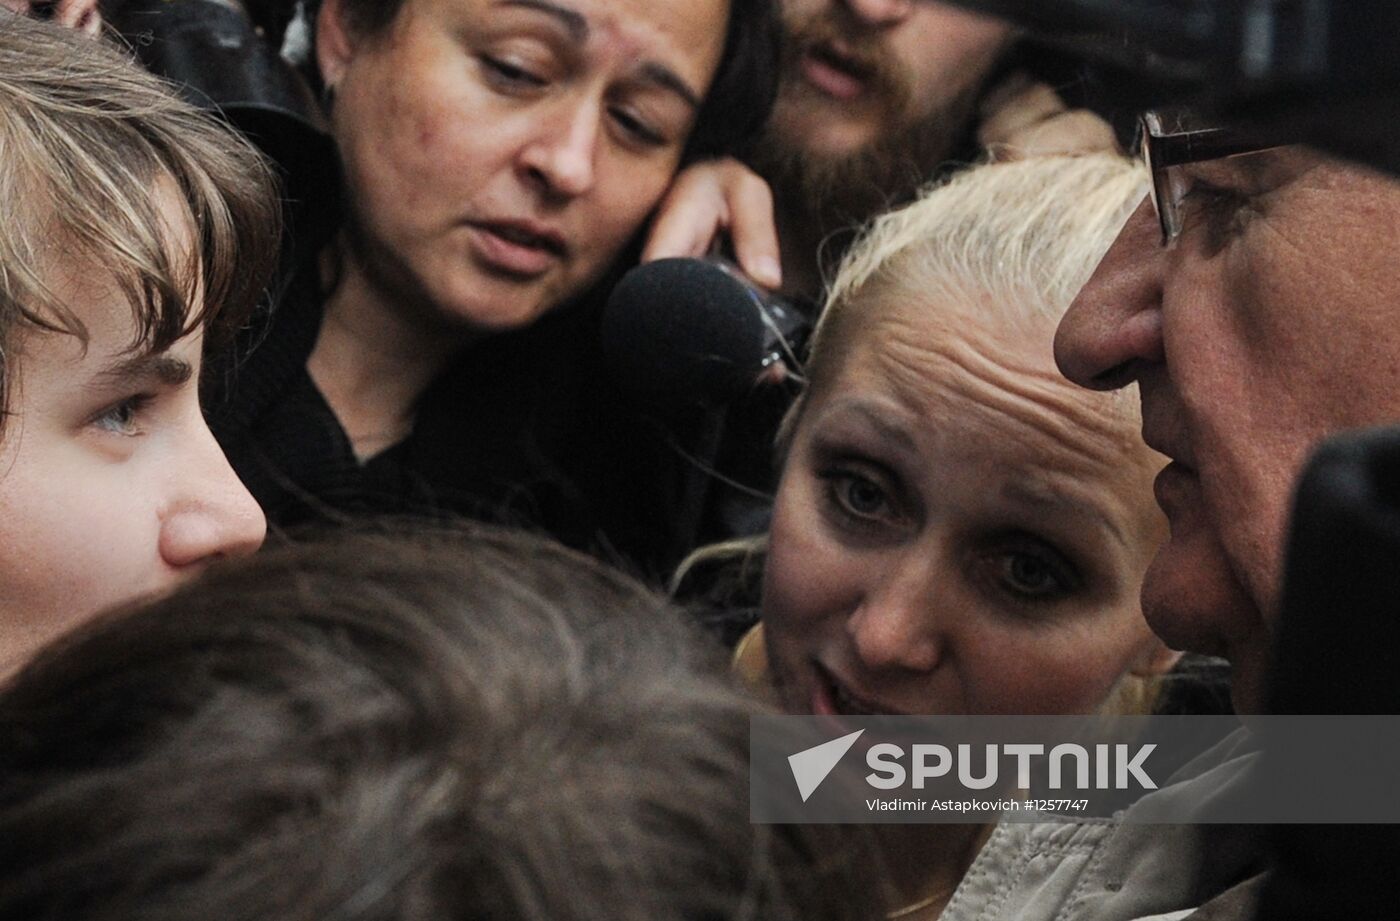 Pussy Riot punk group member Yekaterina Samutsevich freed